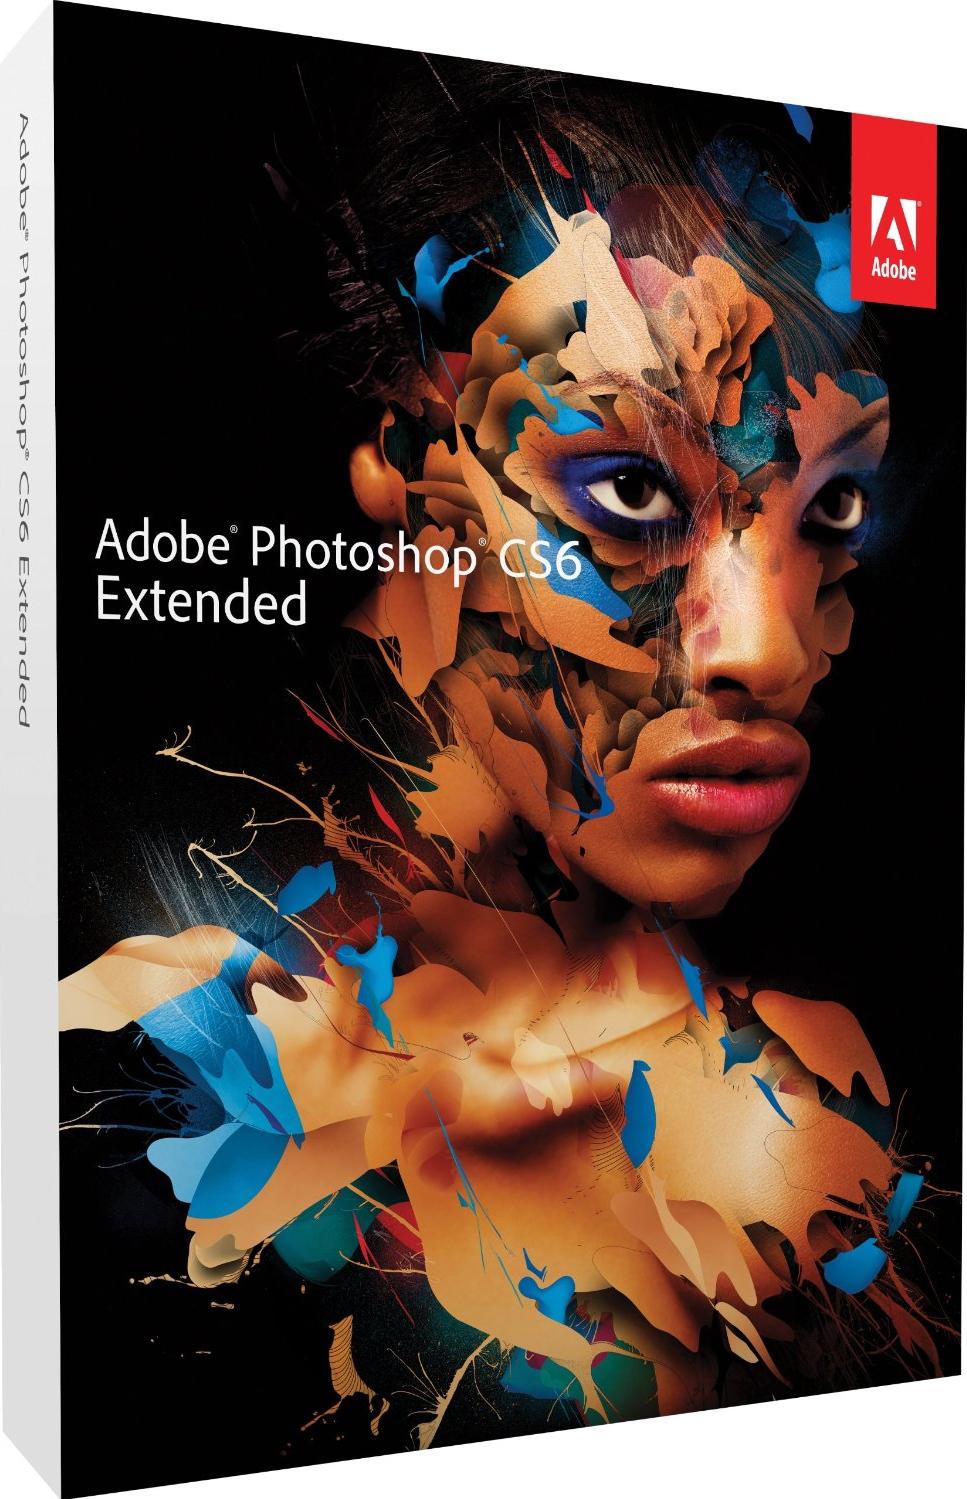 Foto Adobe photoshop cs6 extended, win, rtl, dvd, esp photoshop, 100